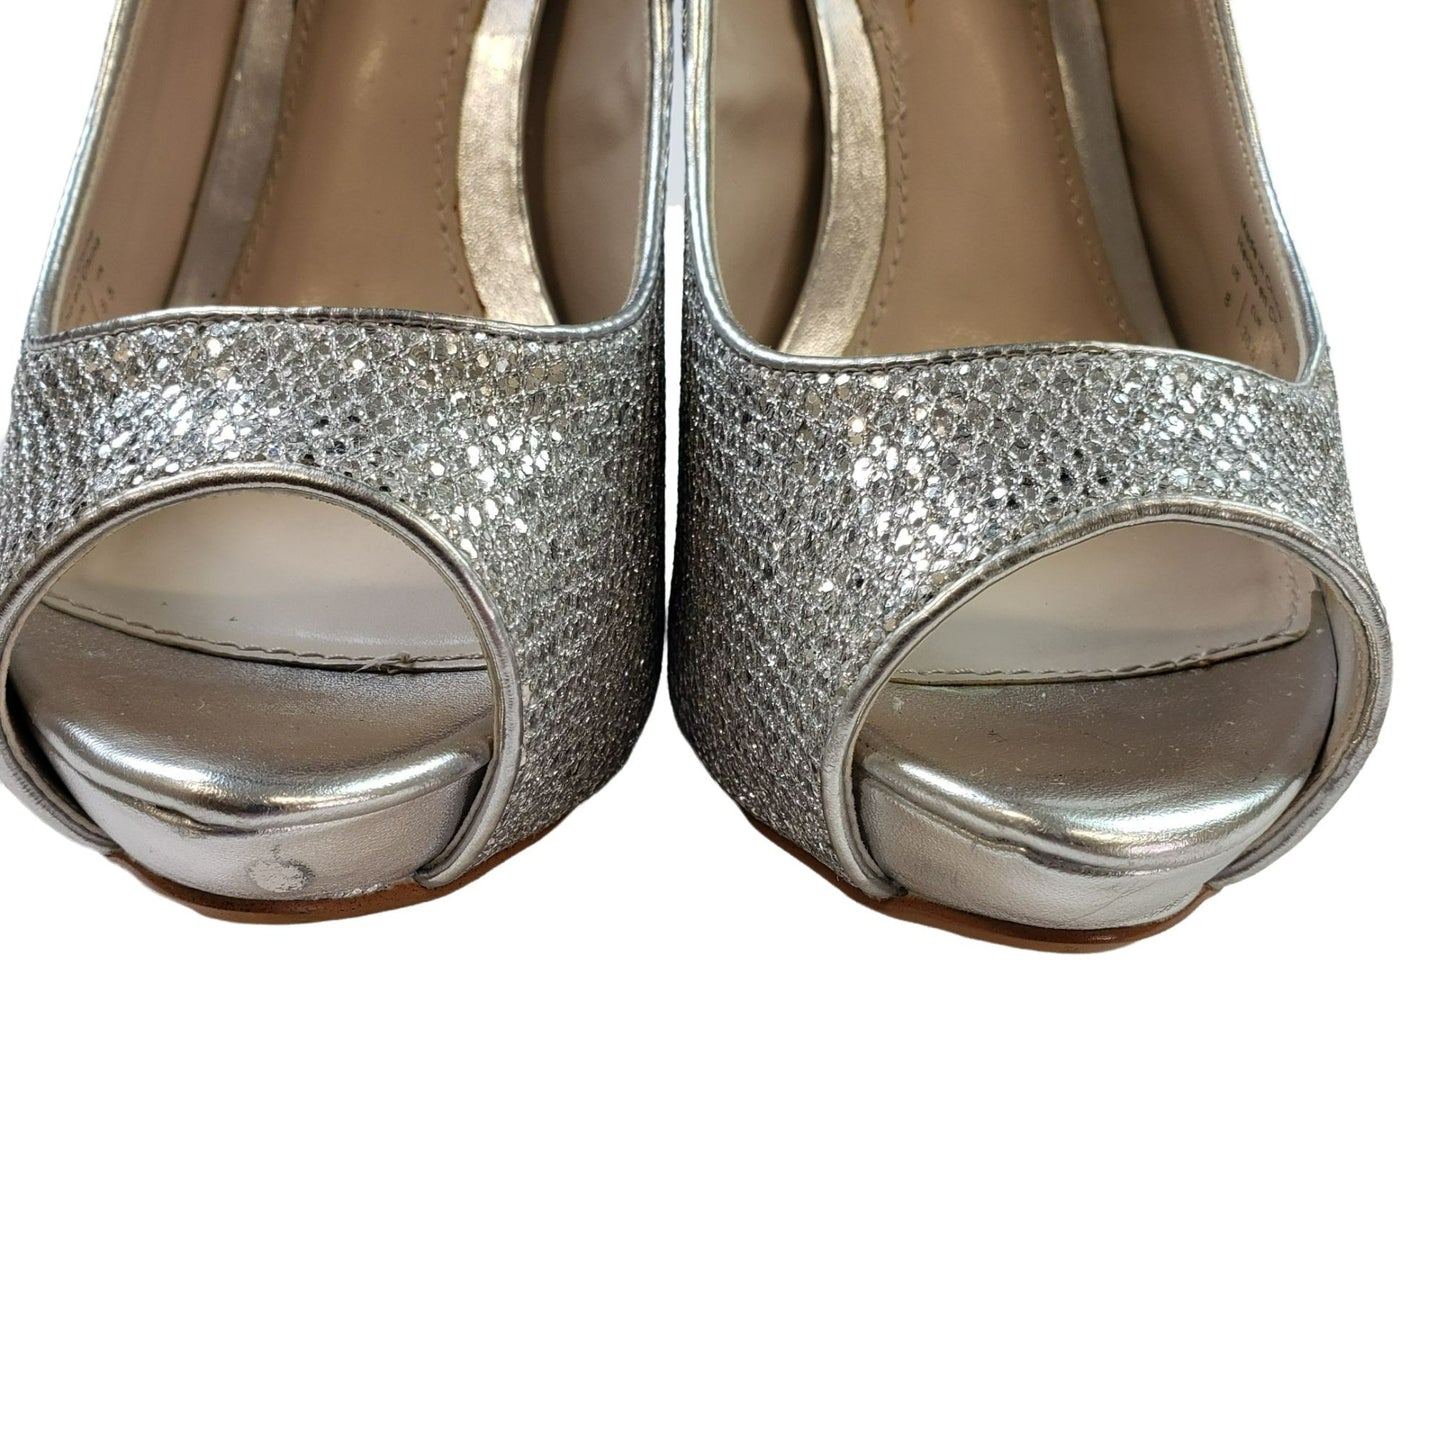 Aldo Nean Silver Peep Toe Platform Heels Size 8